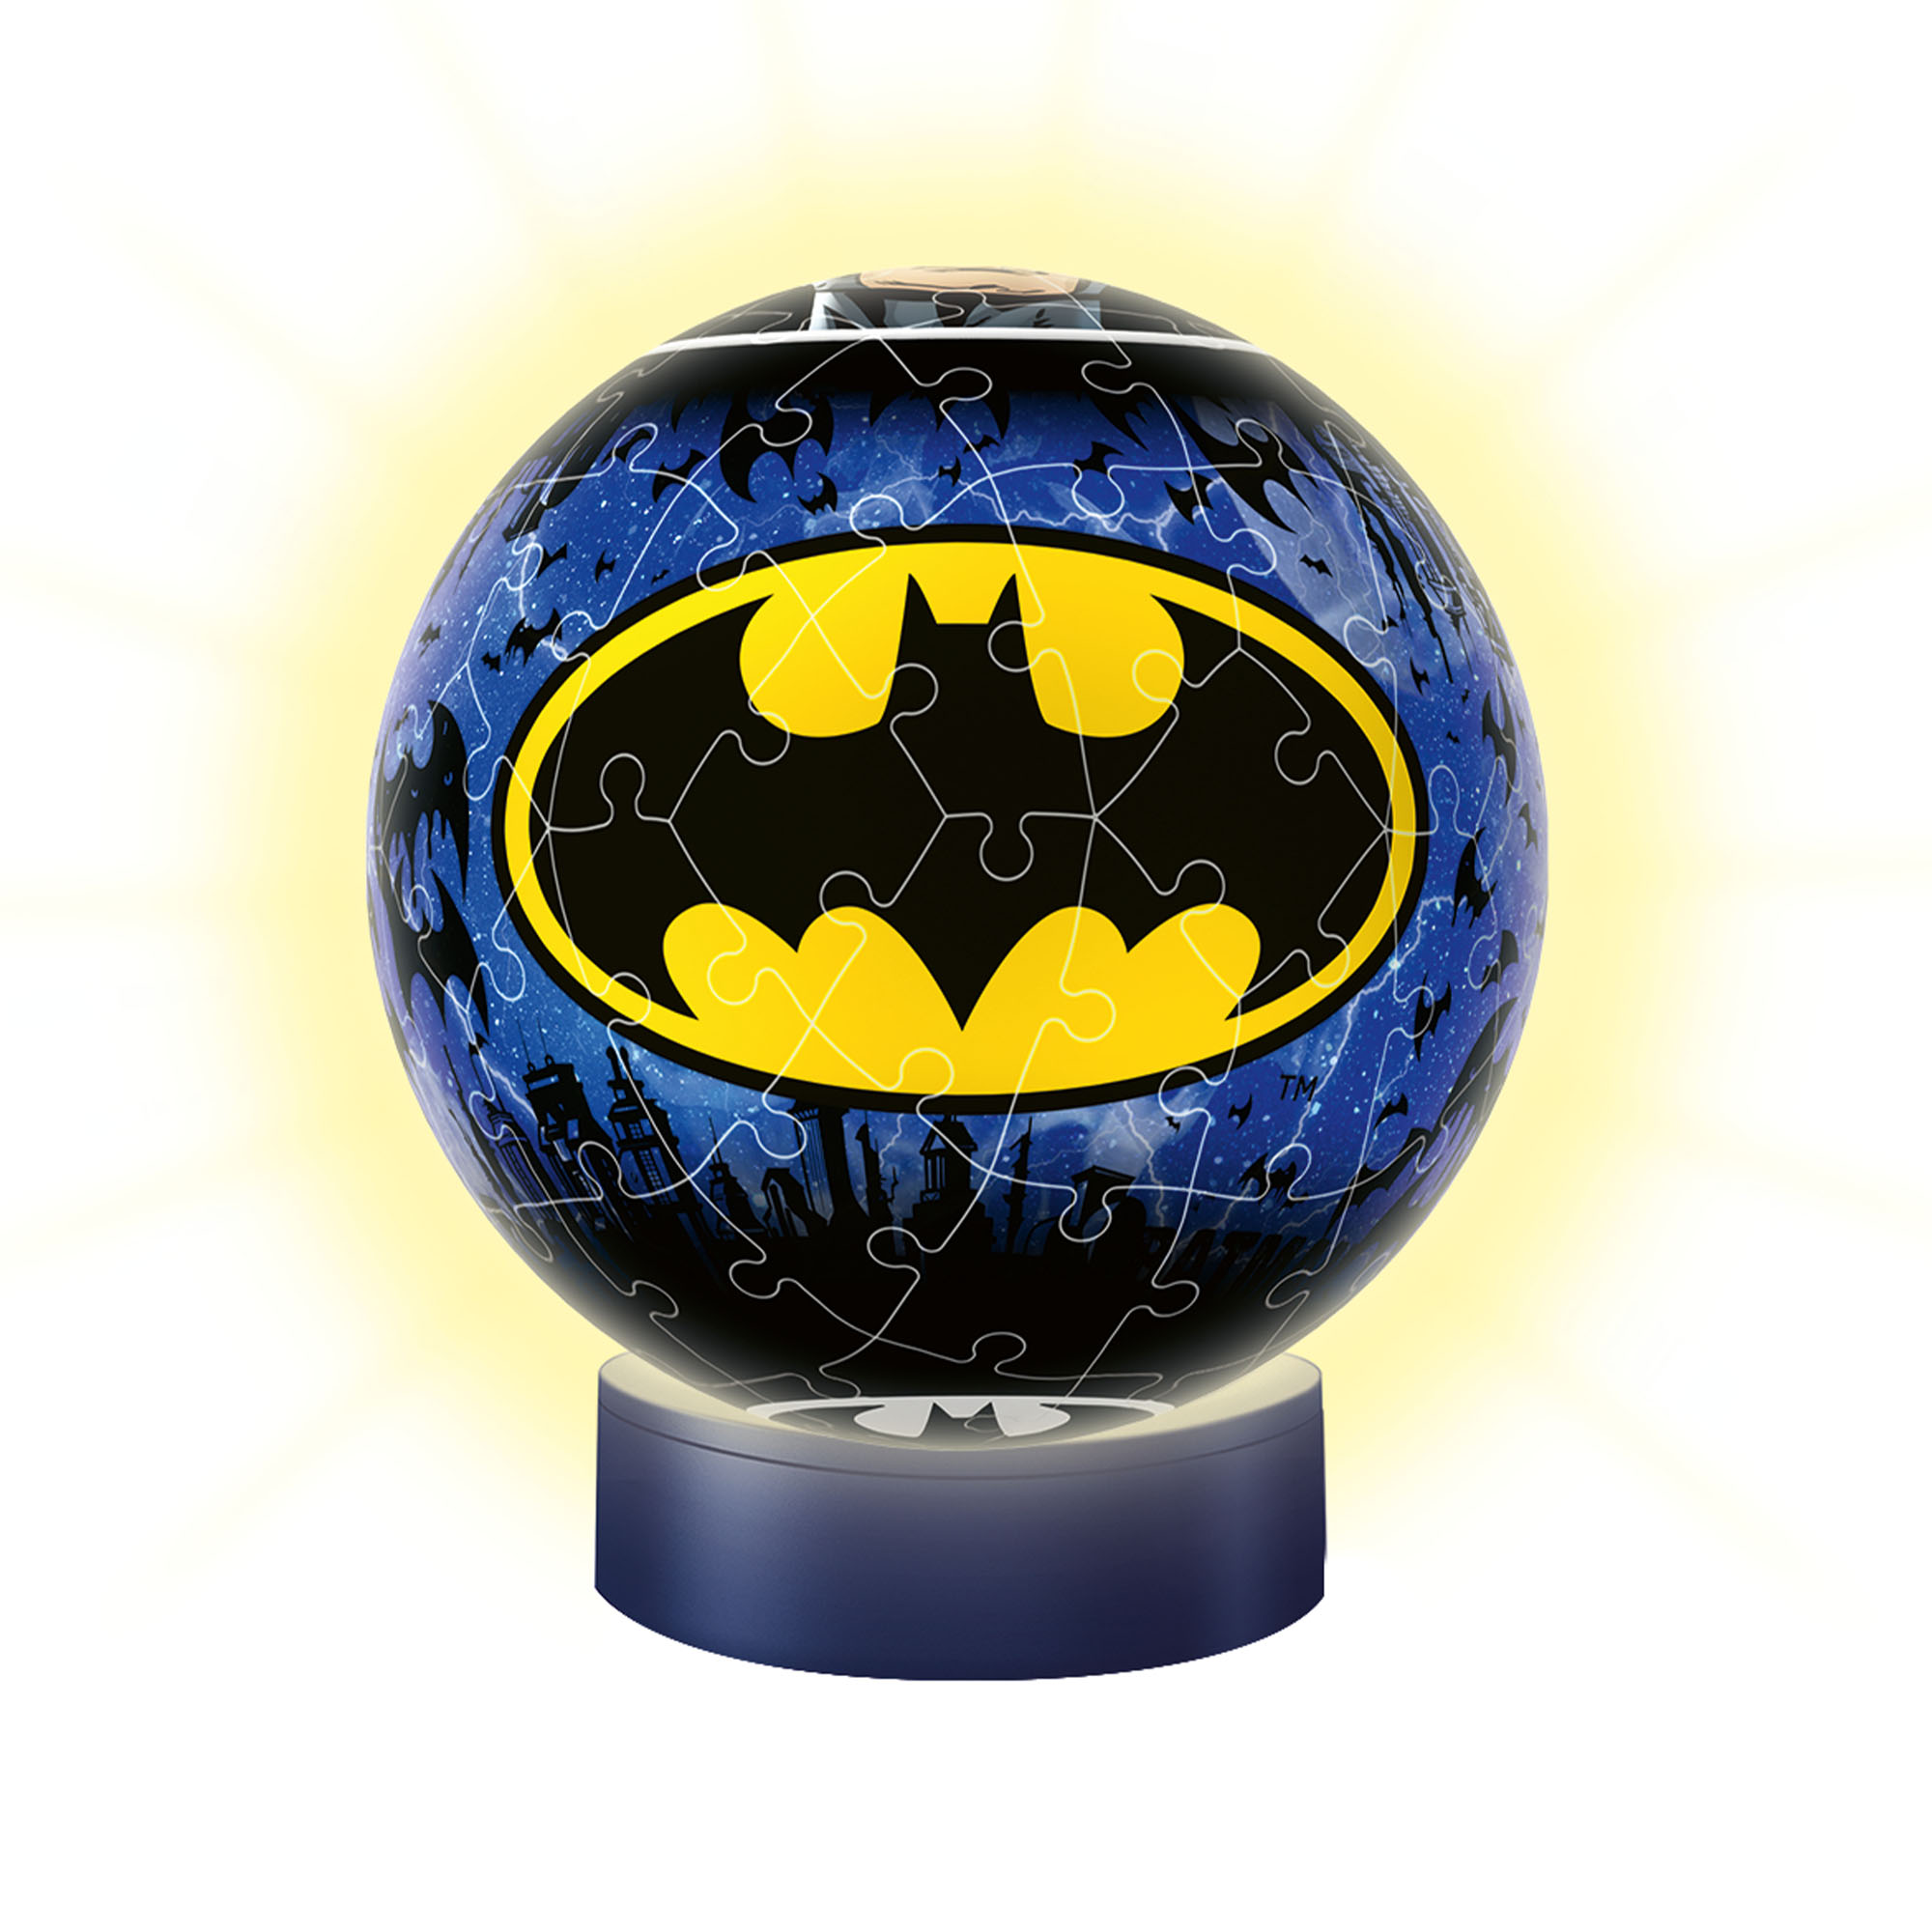 Ravensburger 3D Puzzle Lampada Notturna - 11080 - Batman, , large